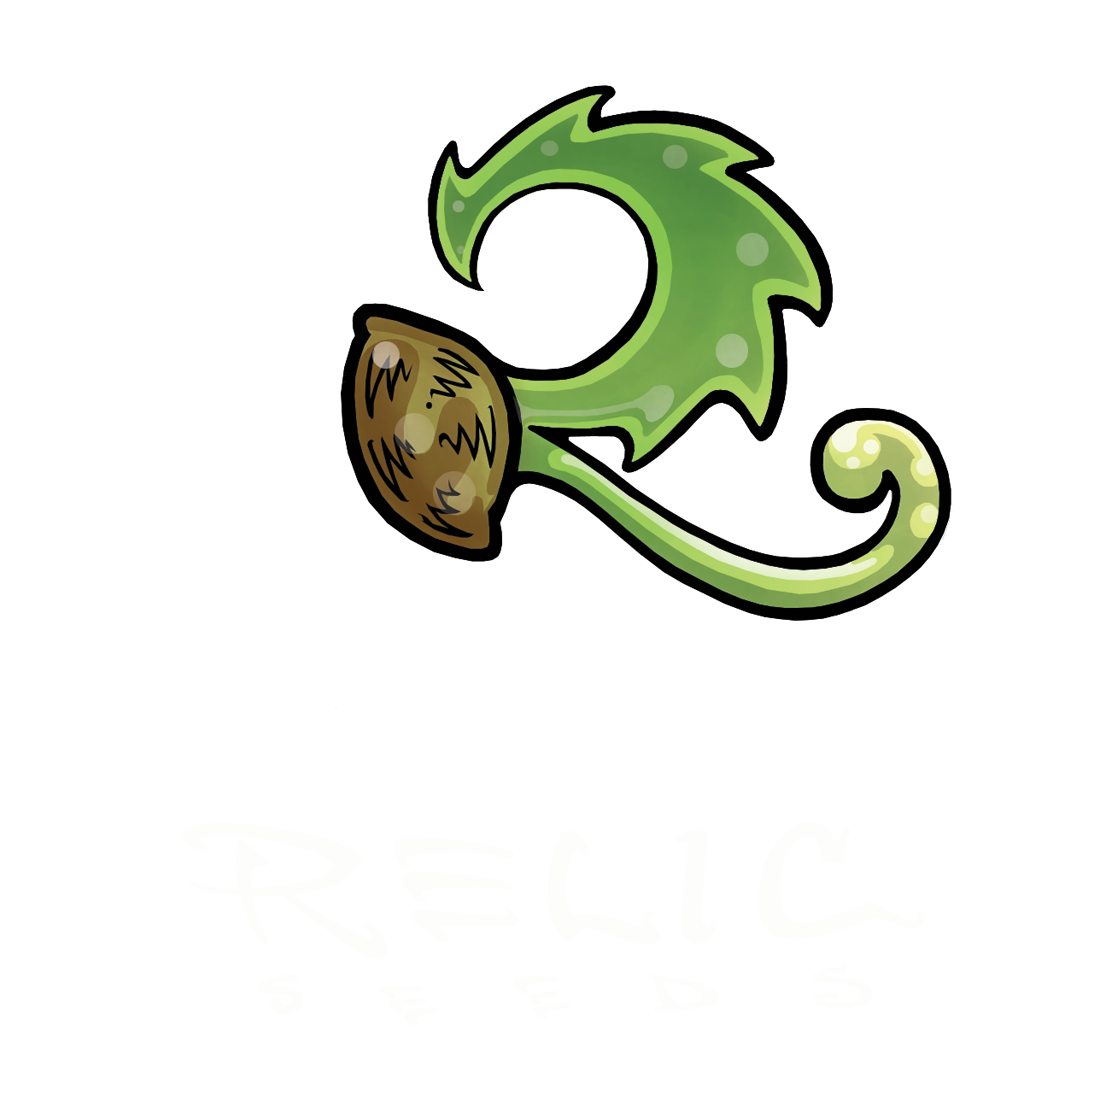 www.relicseeds.com